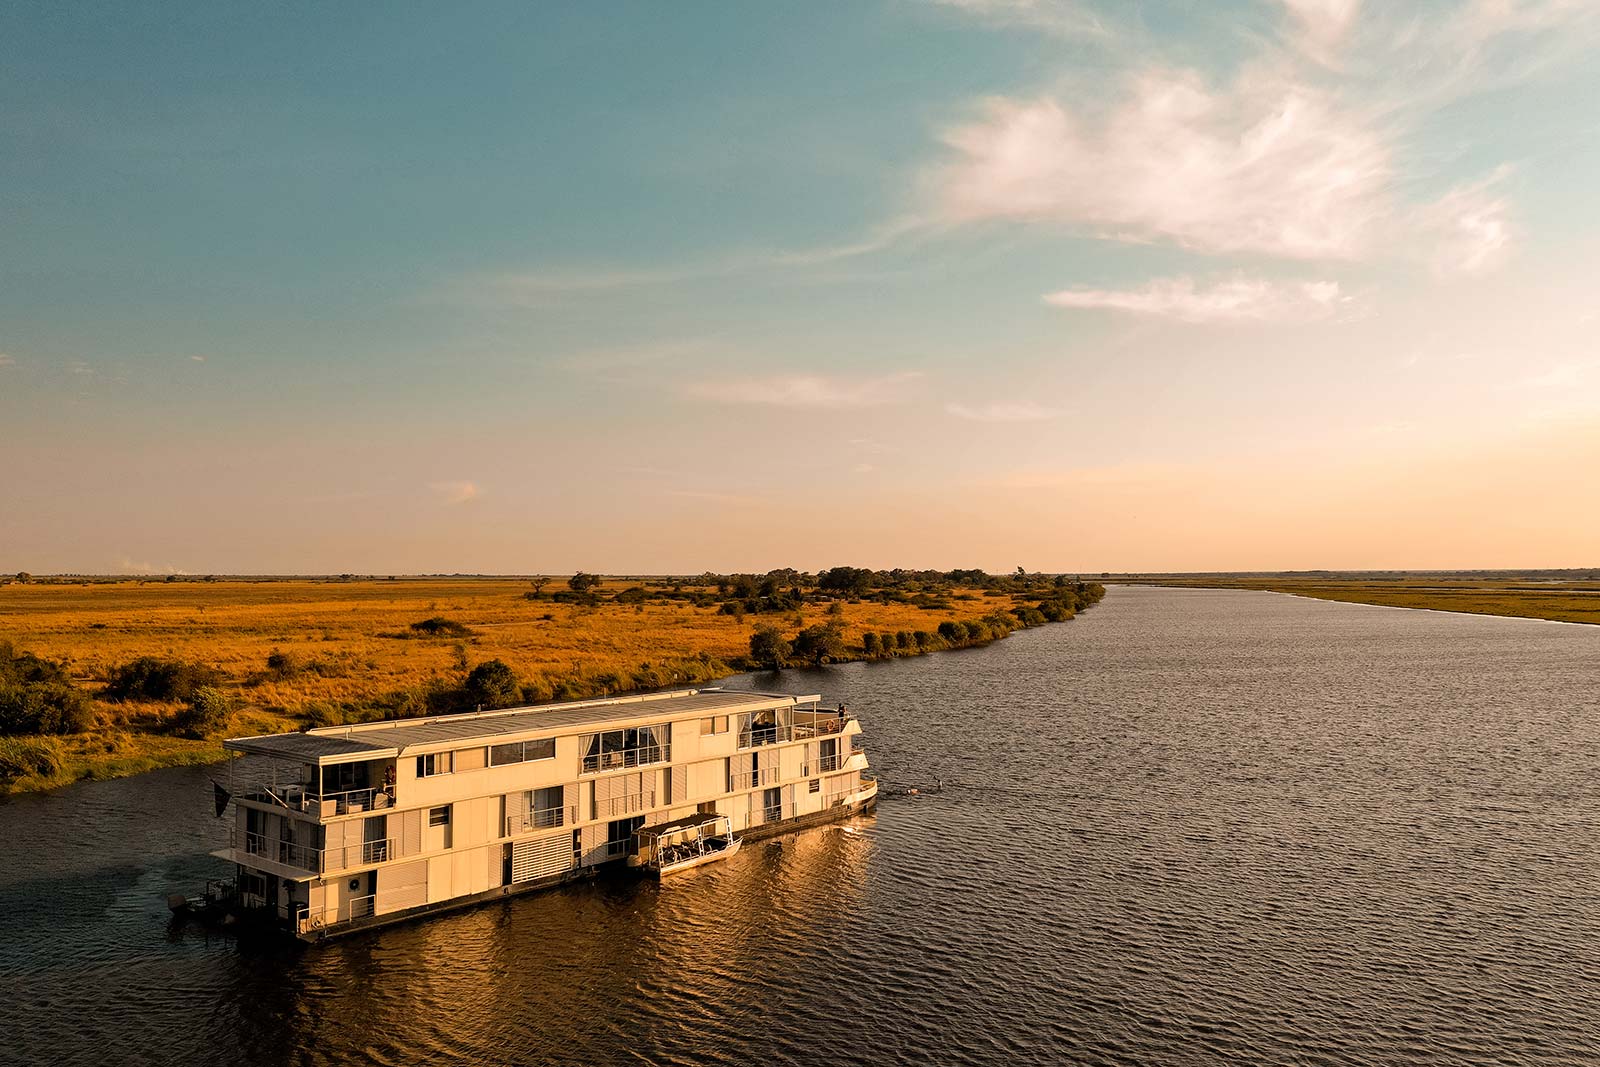 Zambezi Queen at Zambezi River in Botswana, Africa. The hunt for 100 trillion dollars